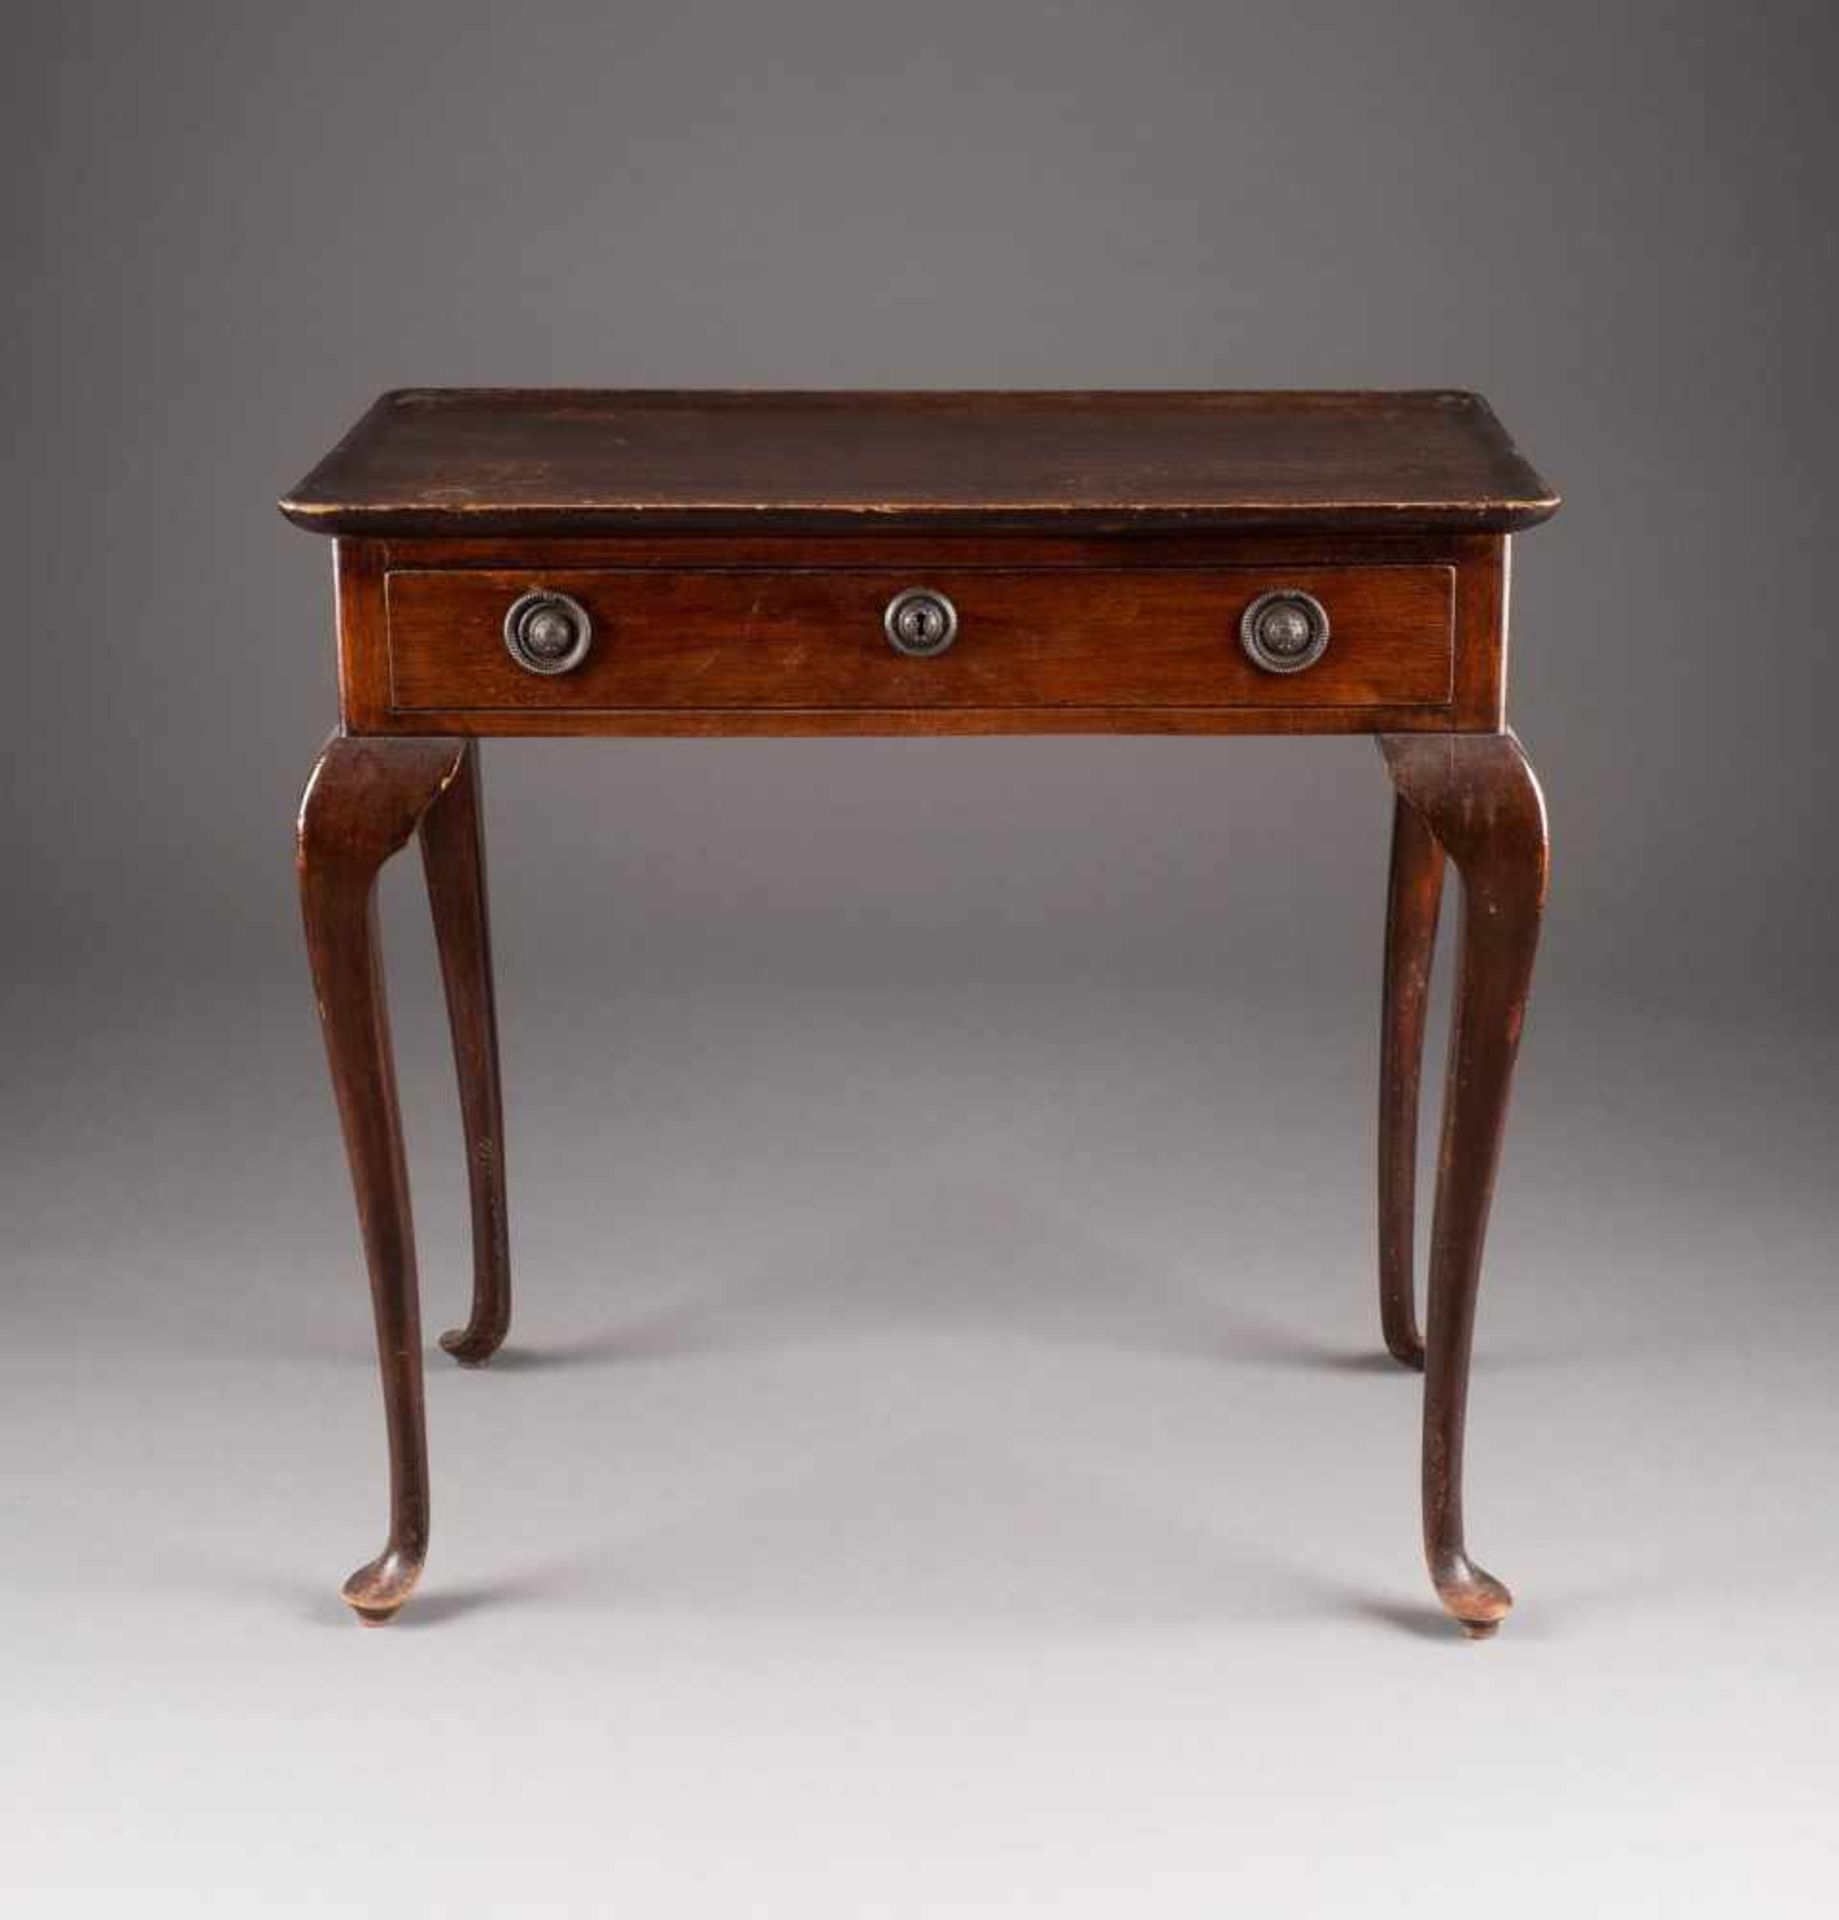 GEORGE III.- TEA TABLE England, um 1800 Wohl Nussbaum, dunkel gebeizt. H. 74 cm, B. 76 cm, T. 47 cm.